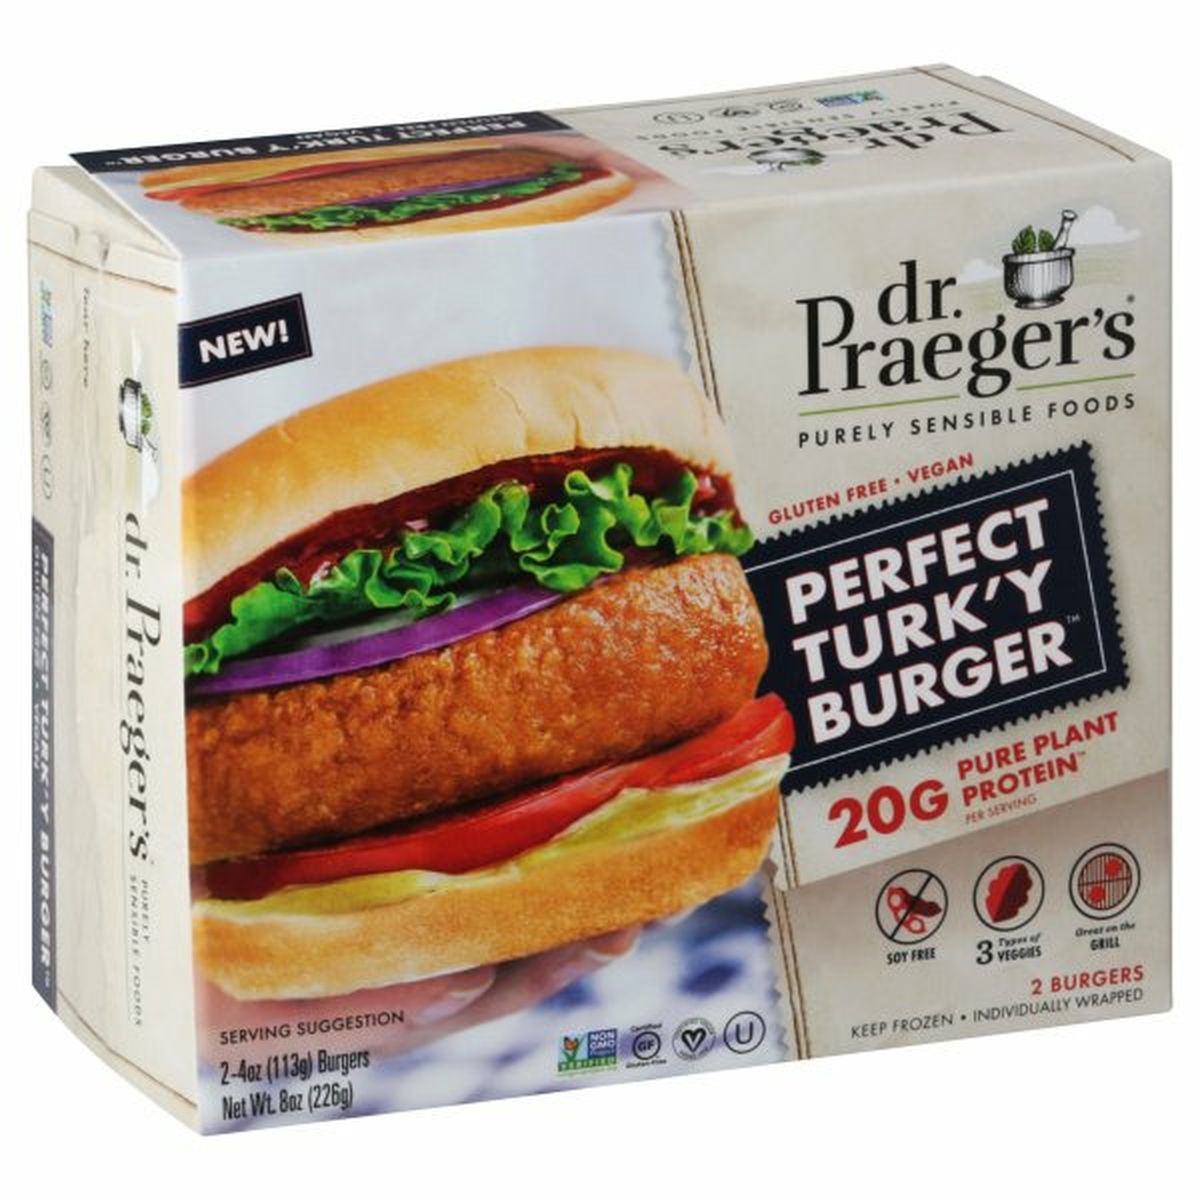 Calories in Dr. Praeger's Turkey Burger, Perfect